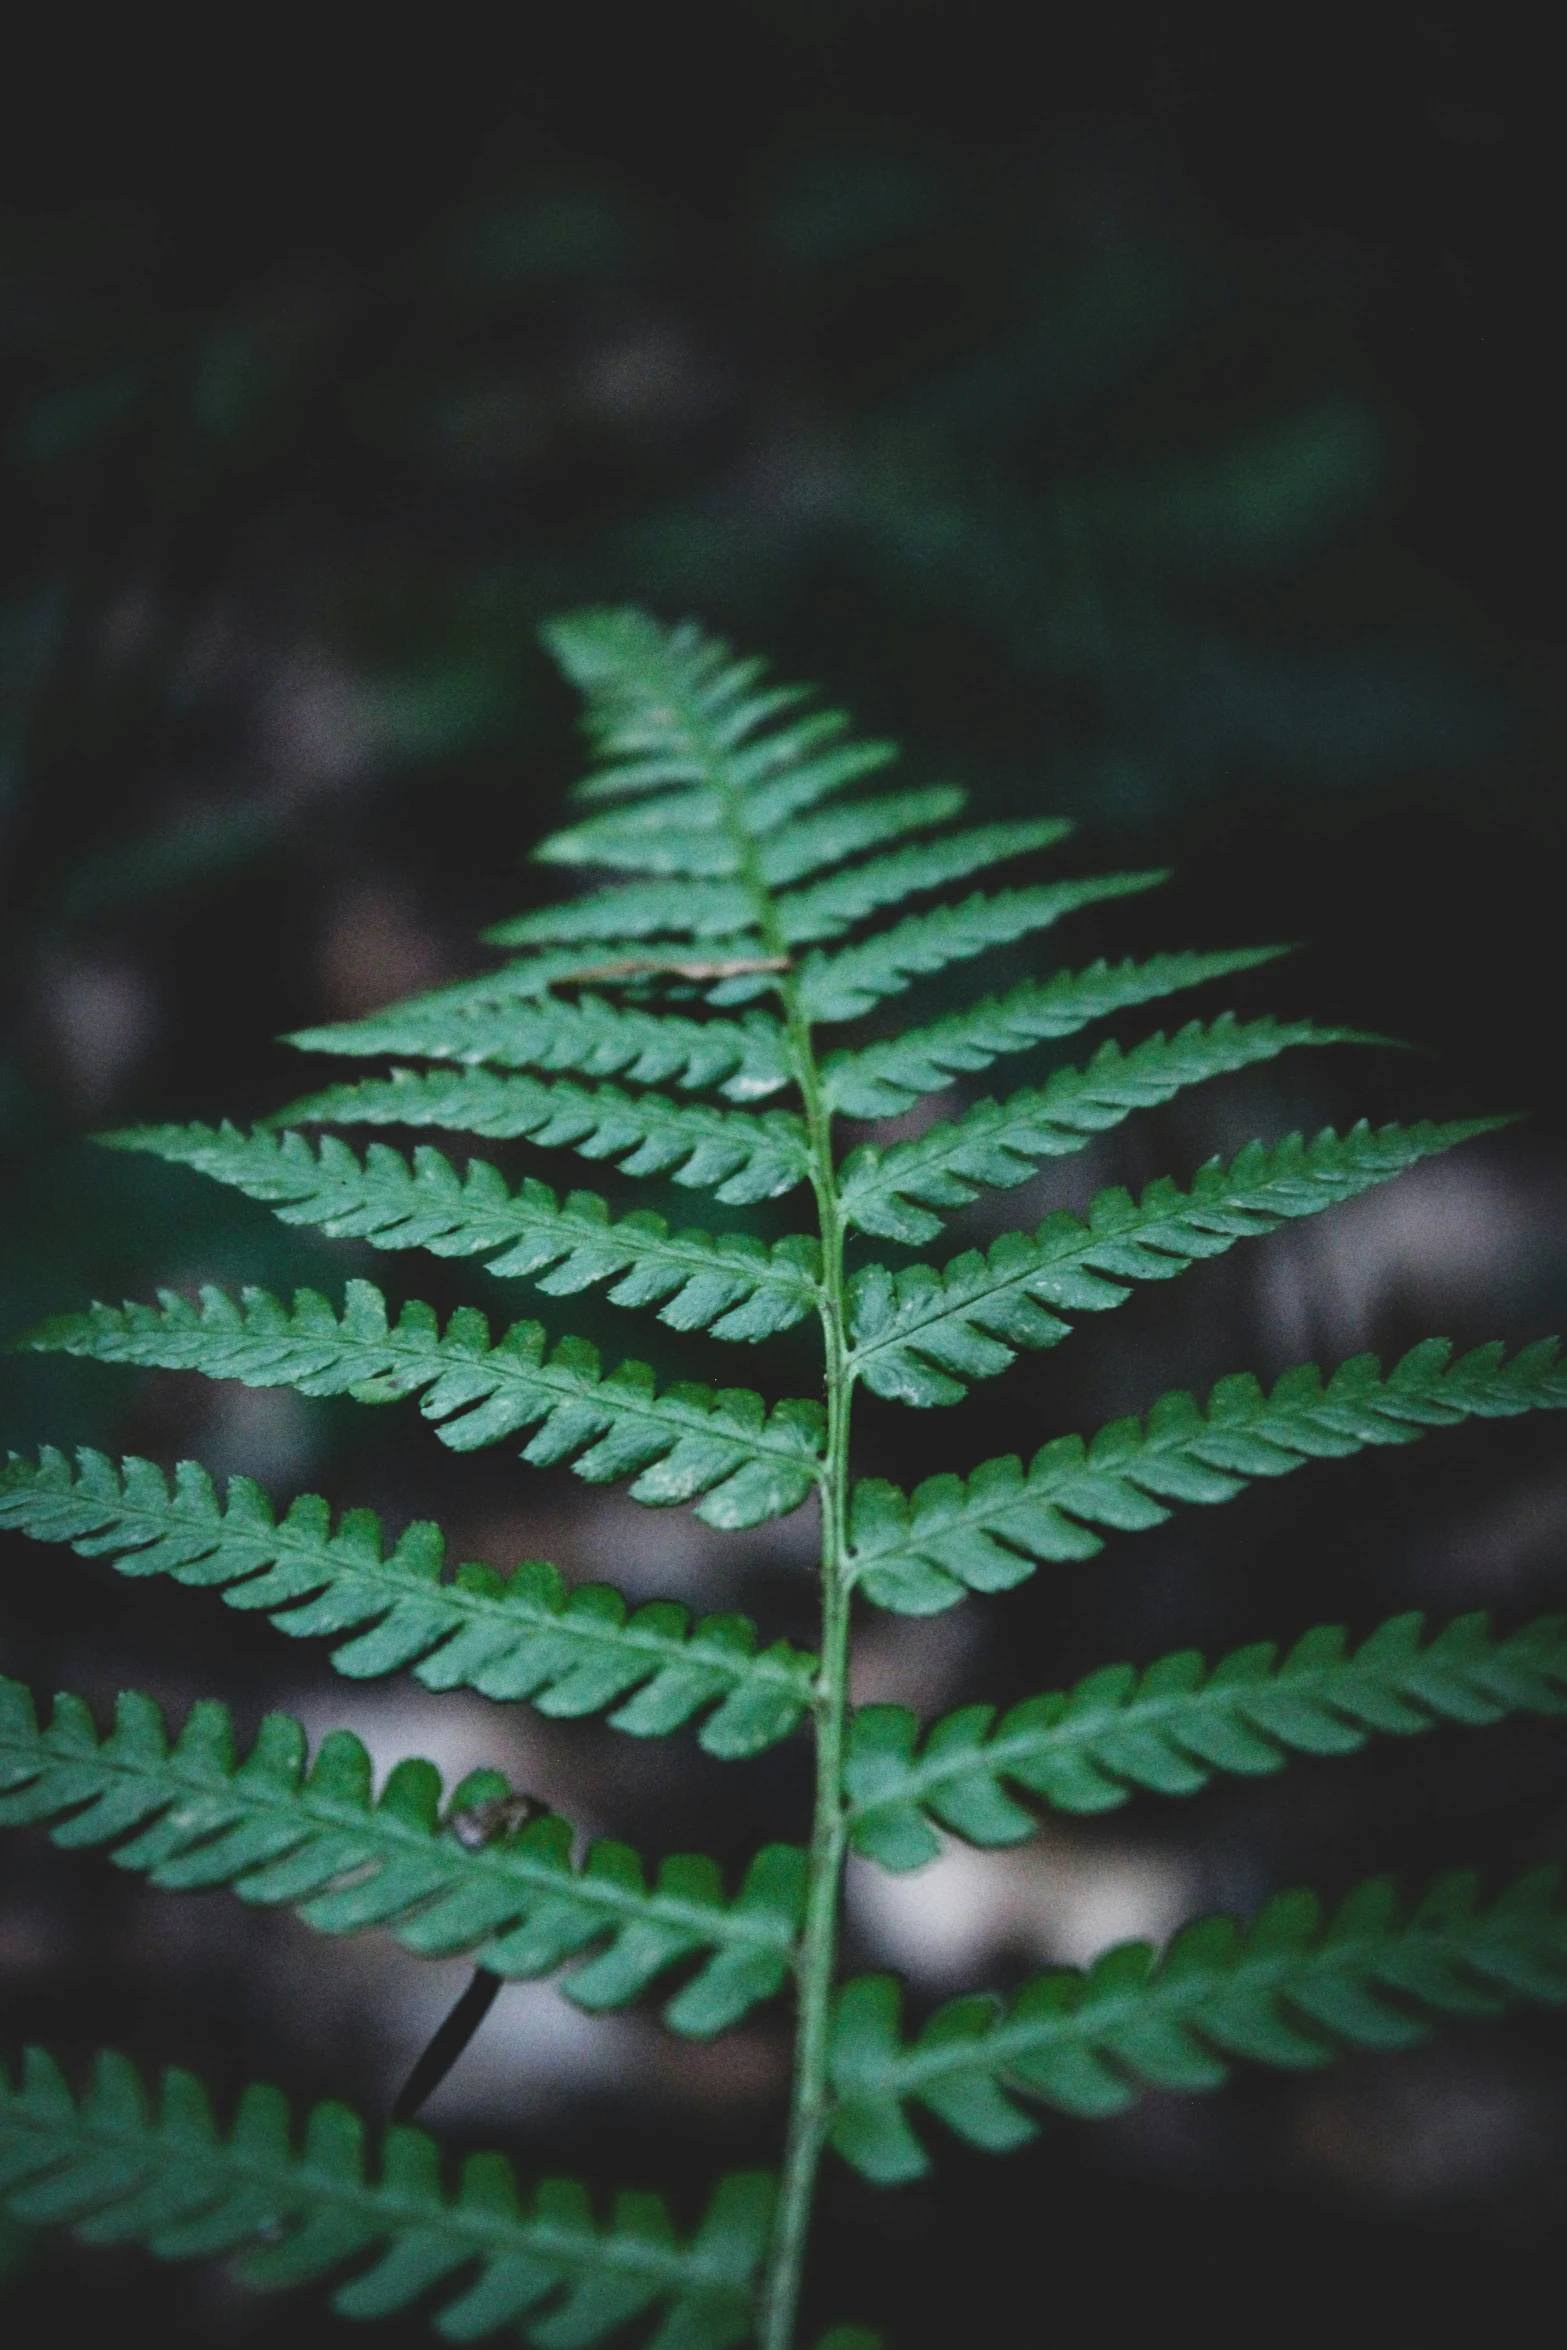 a fern with a thin green stem